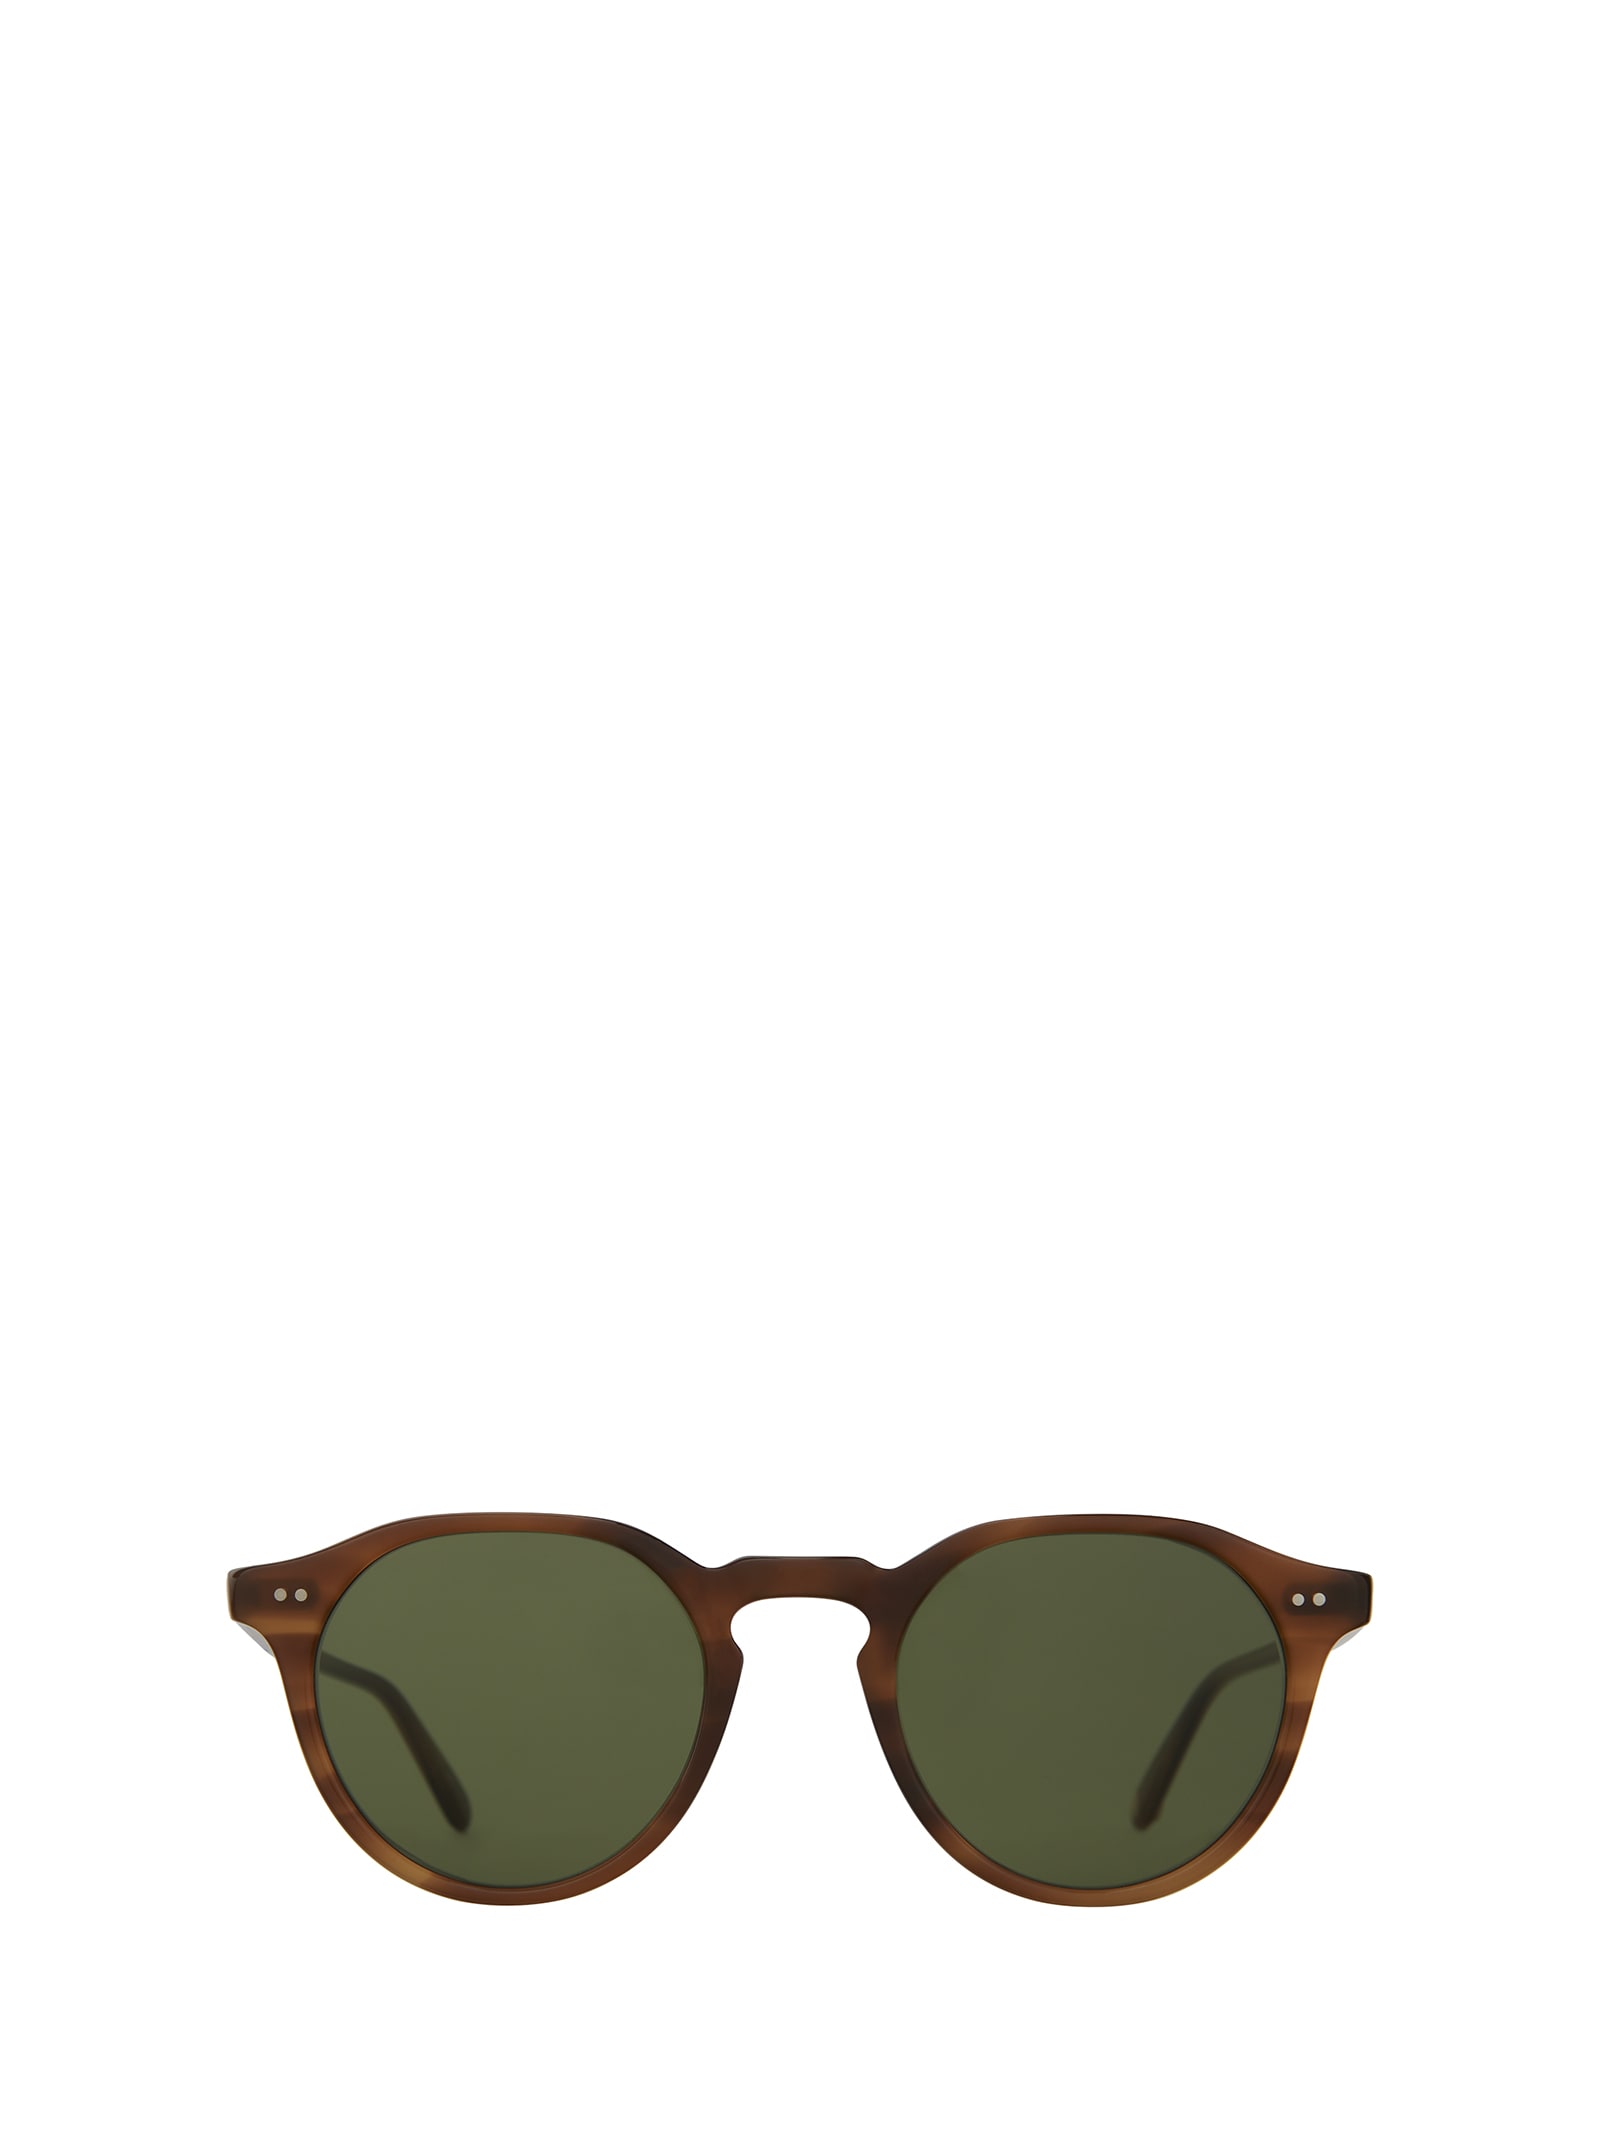 Royce Sun Saddle Tortoise Sunglasses